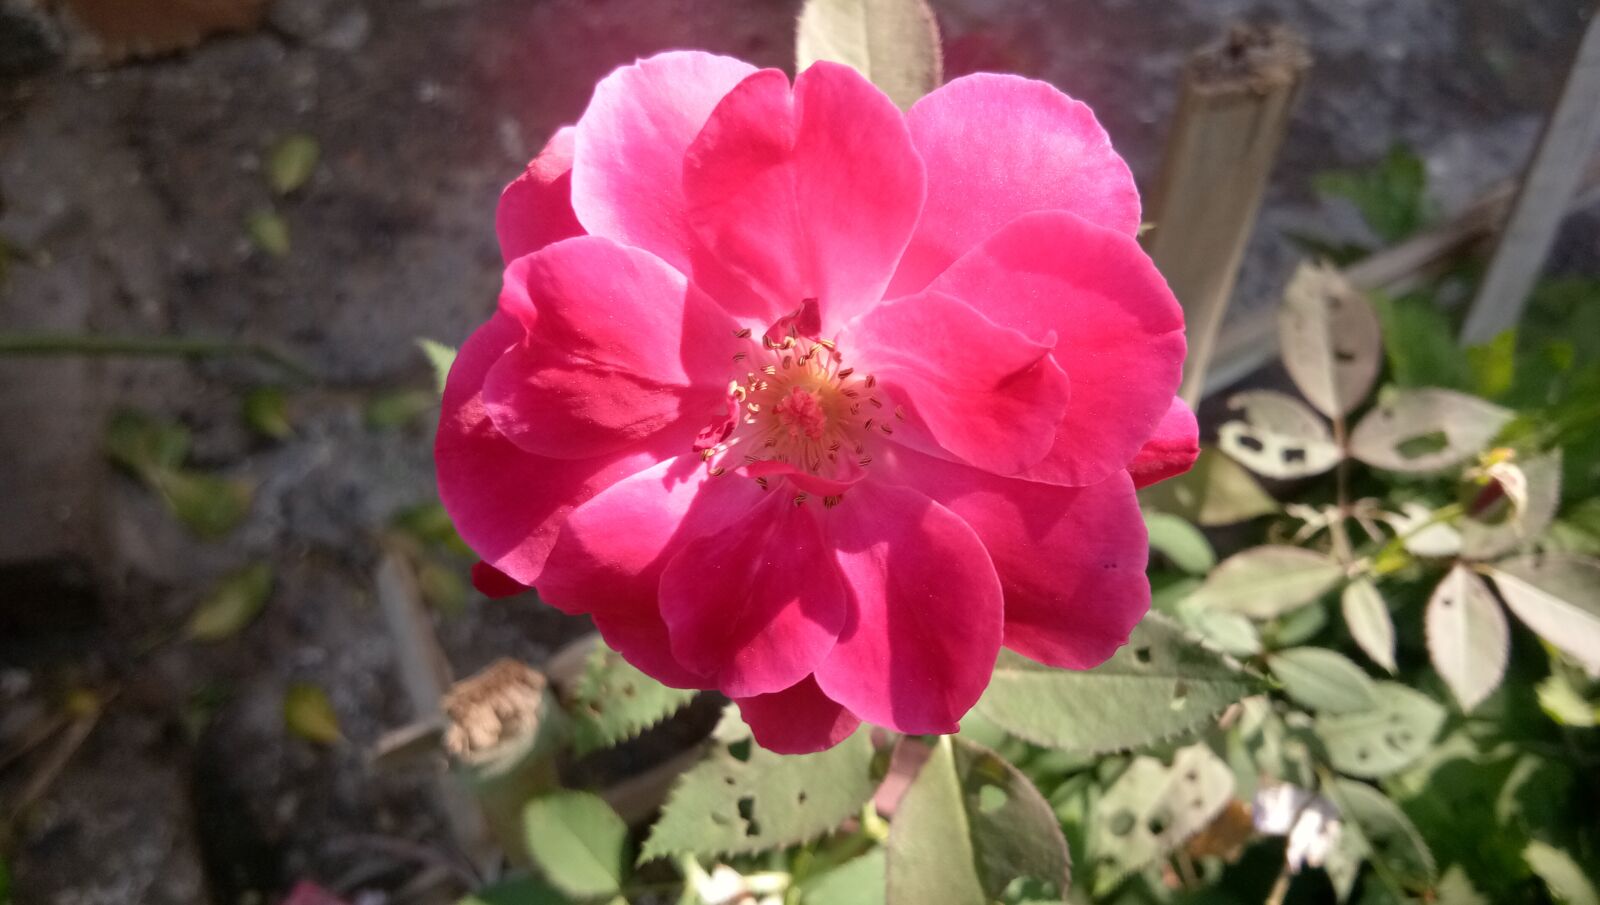 vivo 1601 sample photo. Nature, flower, rose photography